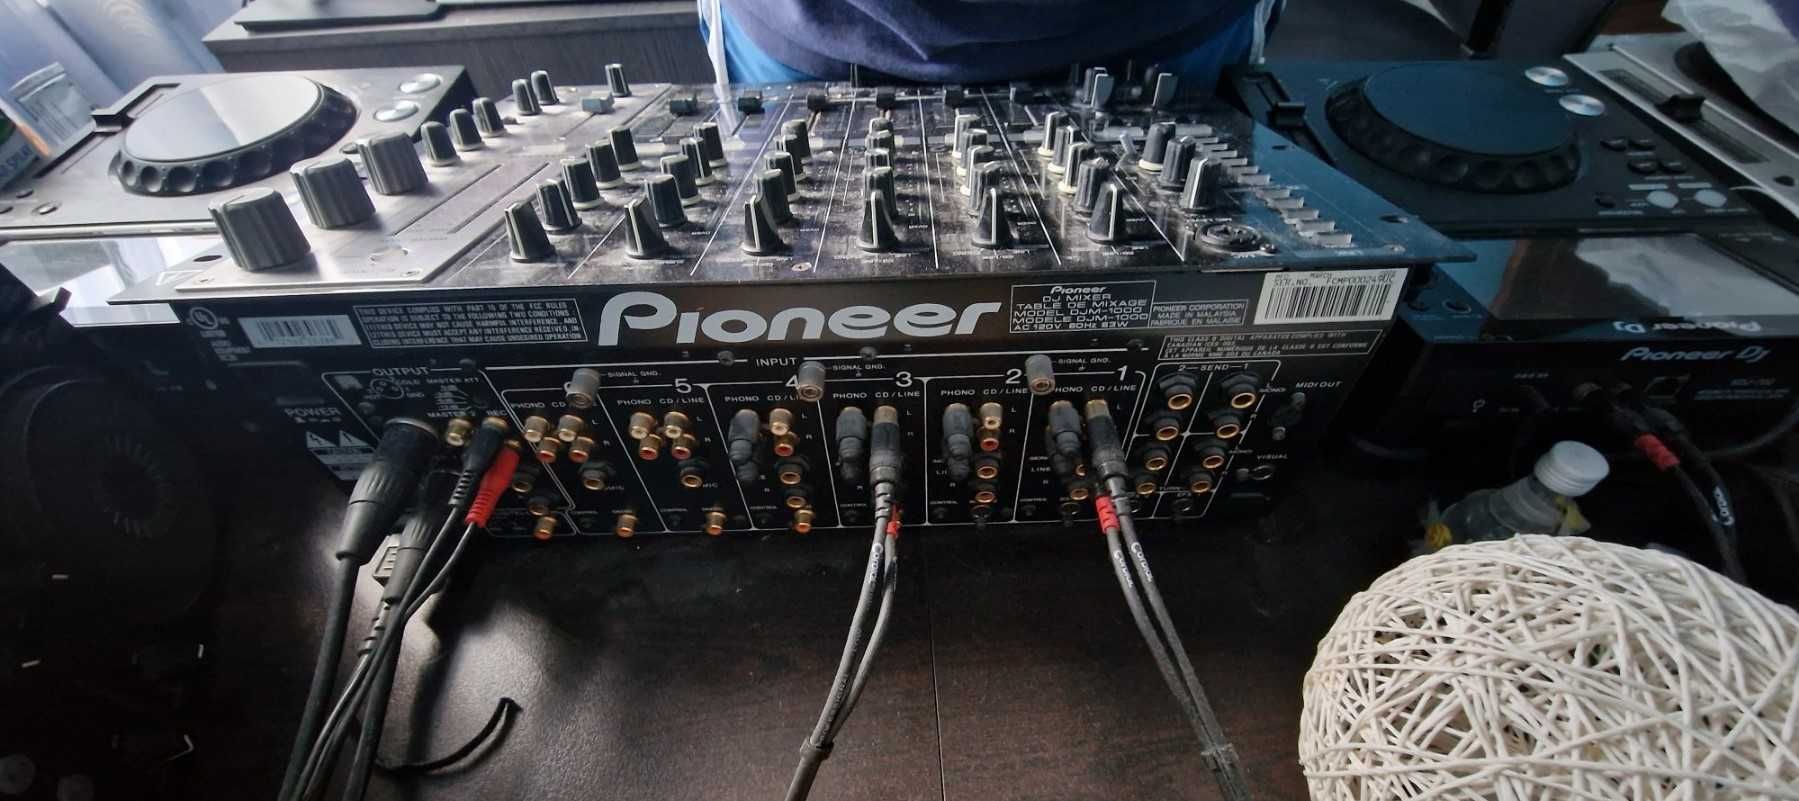 Pioneer DJM 1000